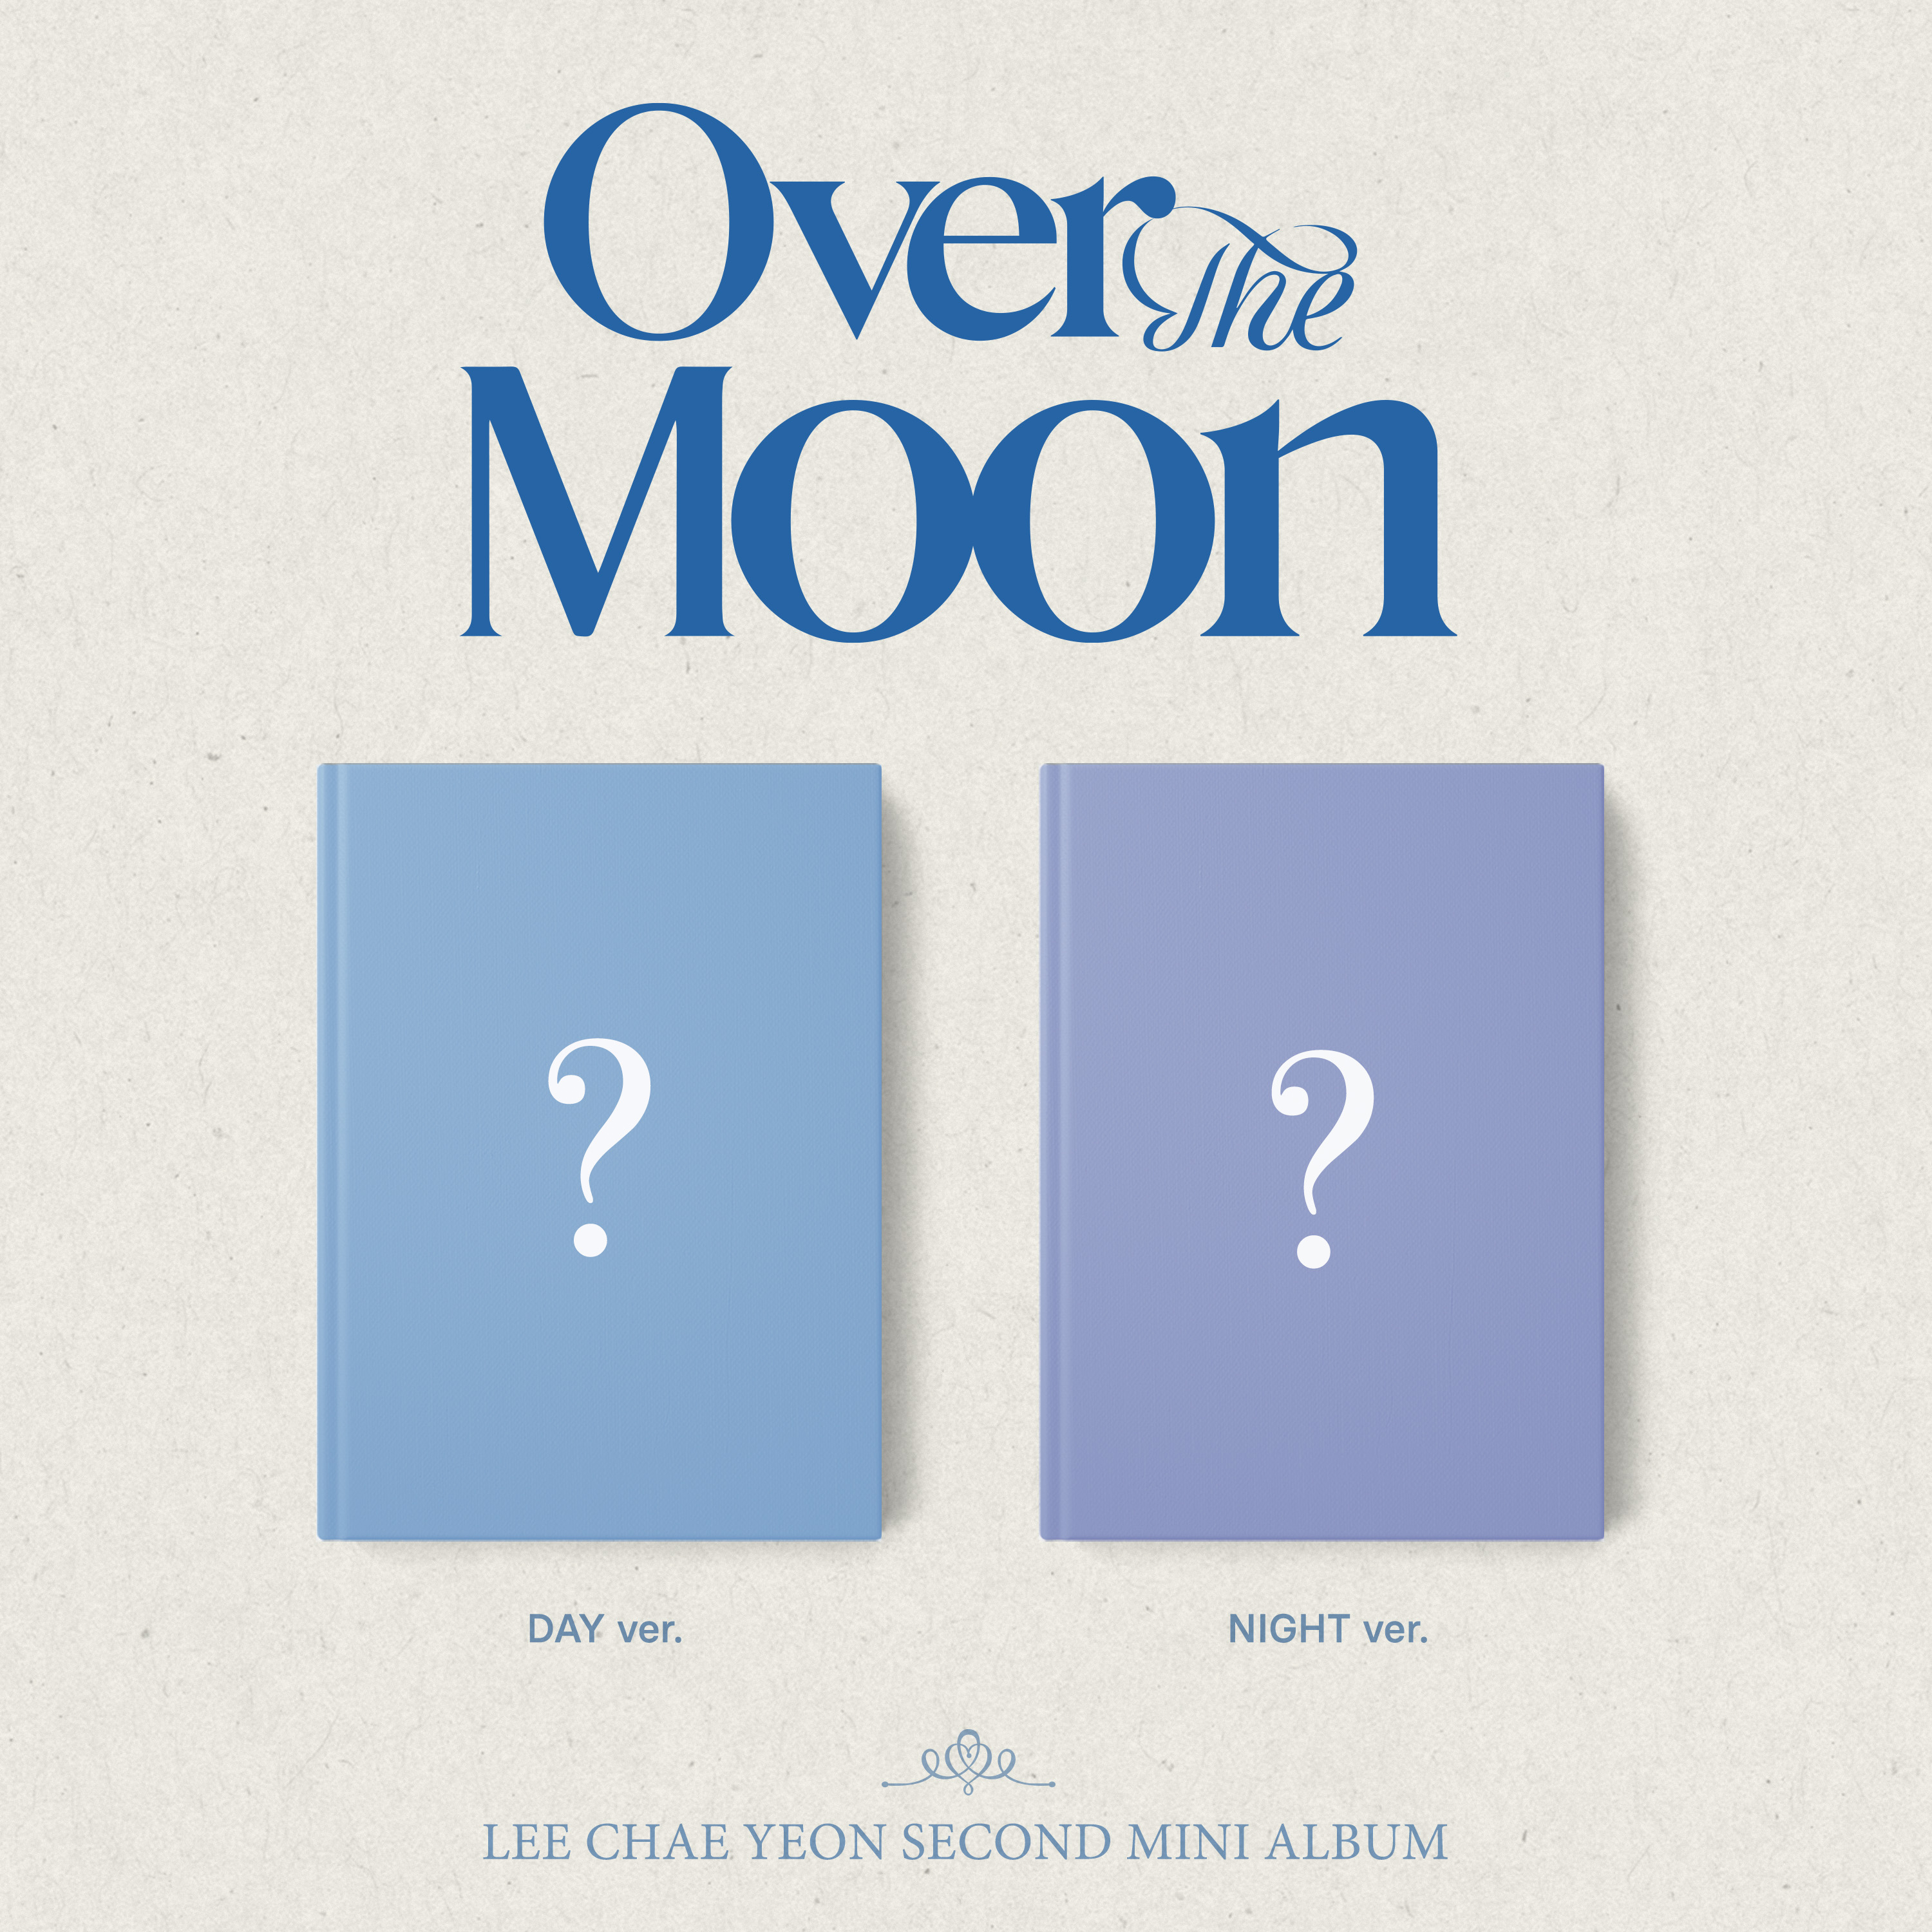 [拆卡专] Lee Chae Yeon - 2nd Mini Album [Over The Moon] _飞吧小羽毛_李彩演散饭联盟